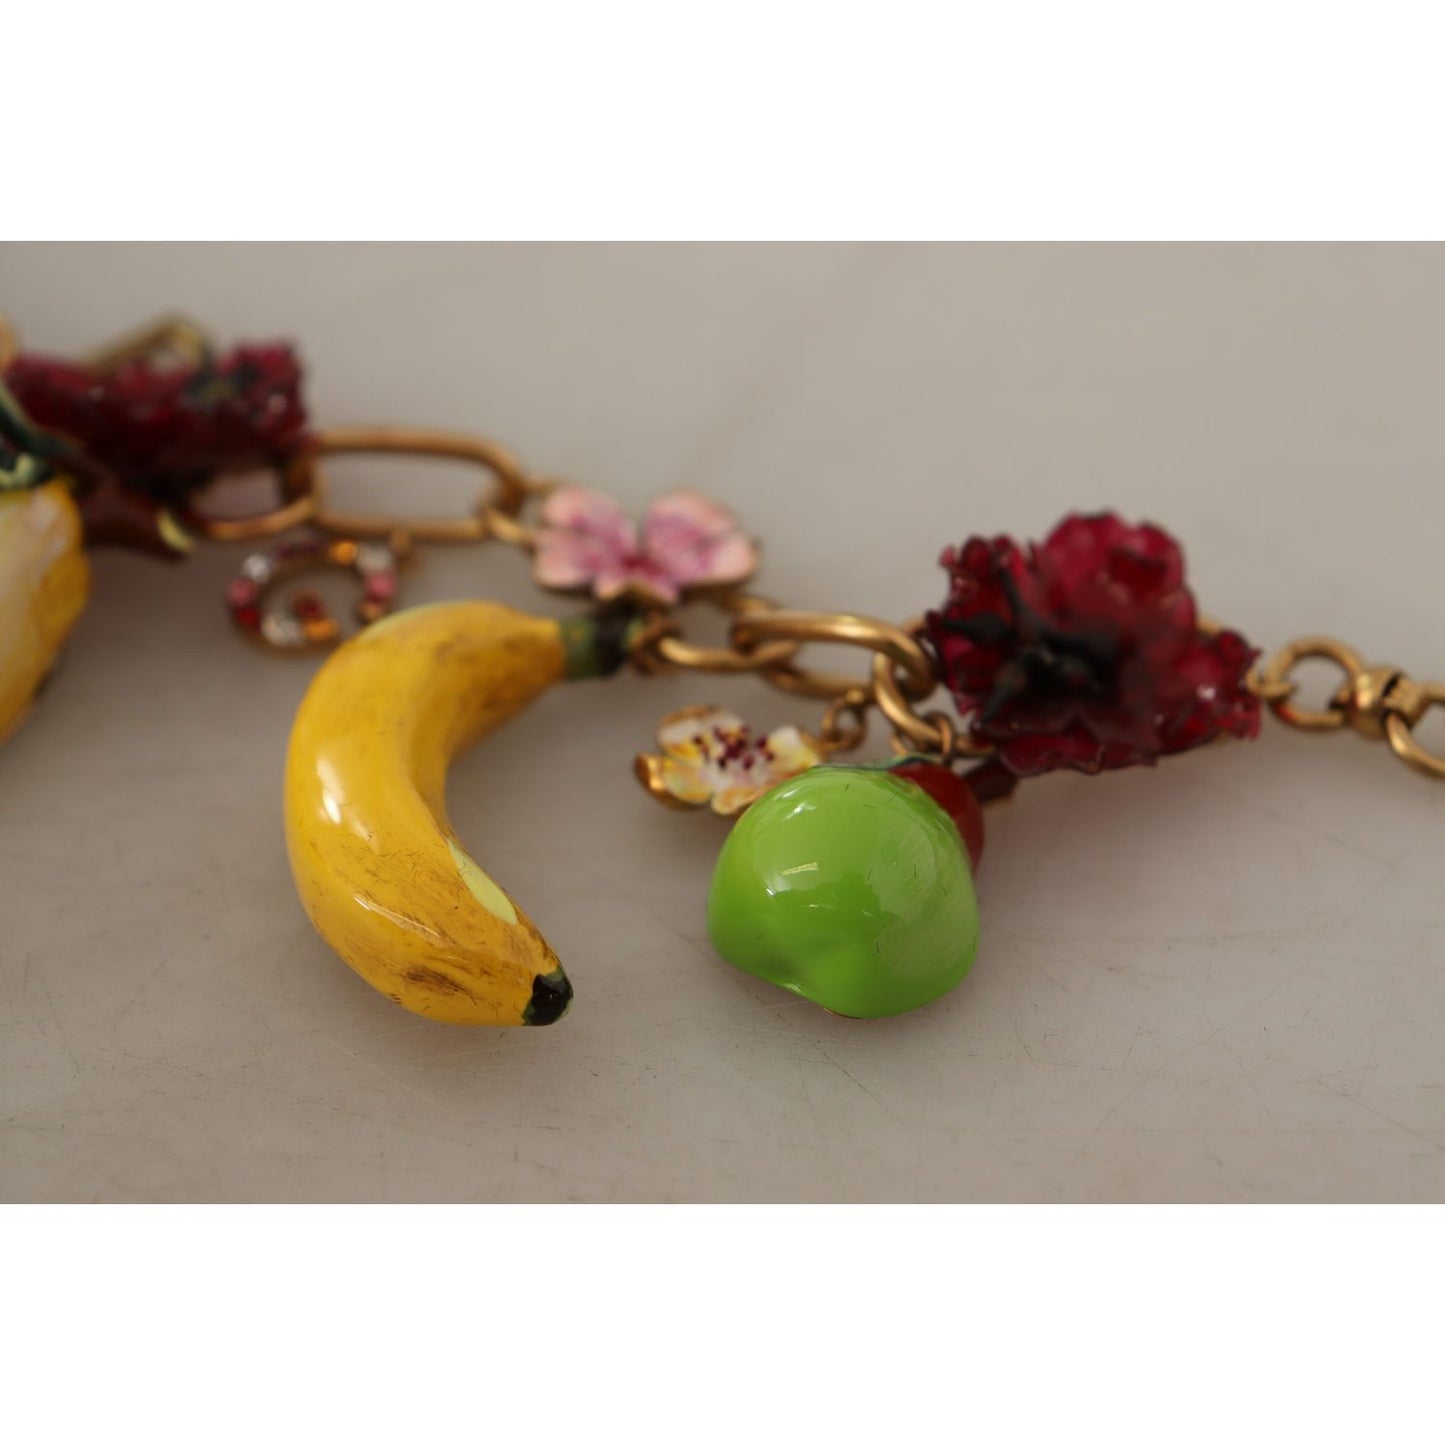 Dolce & Gabbana Chic Gold Statement Sicily Fruit Necklace gold-brass-sicily-fruits-roses-statement-necklace WOMAN NECKLACE IMG_1917-scaled-bd49e563-6da.jpg